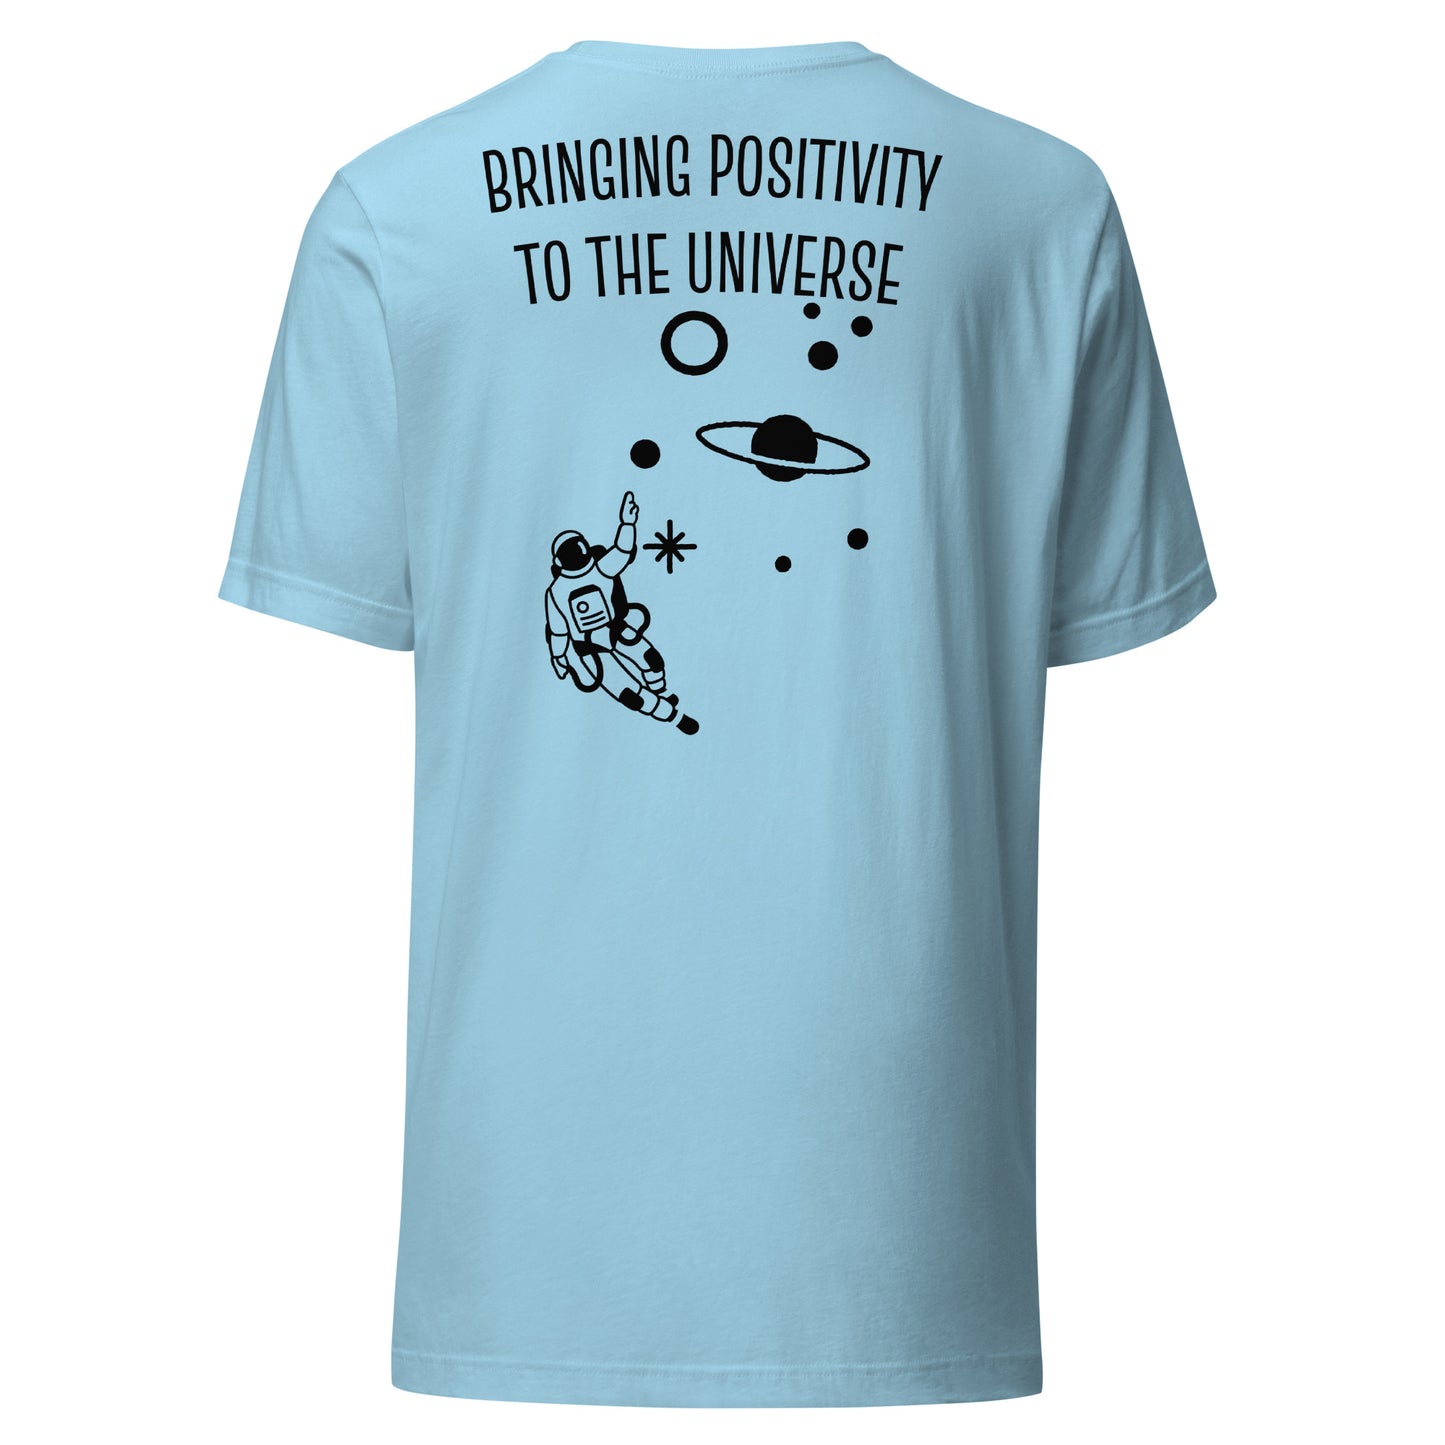 U.C Logo & Bringing Positivity t-shirt